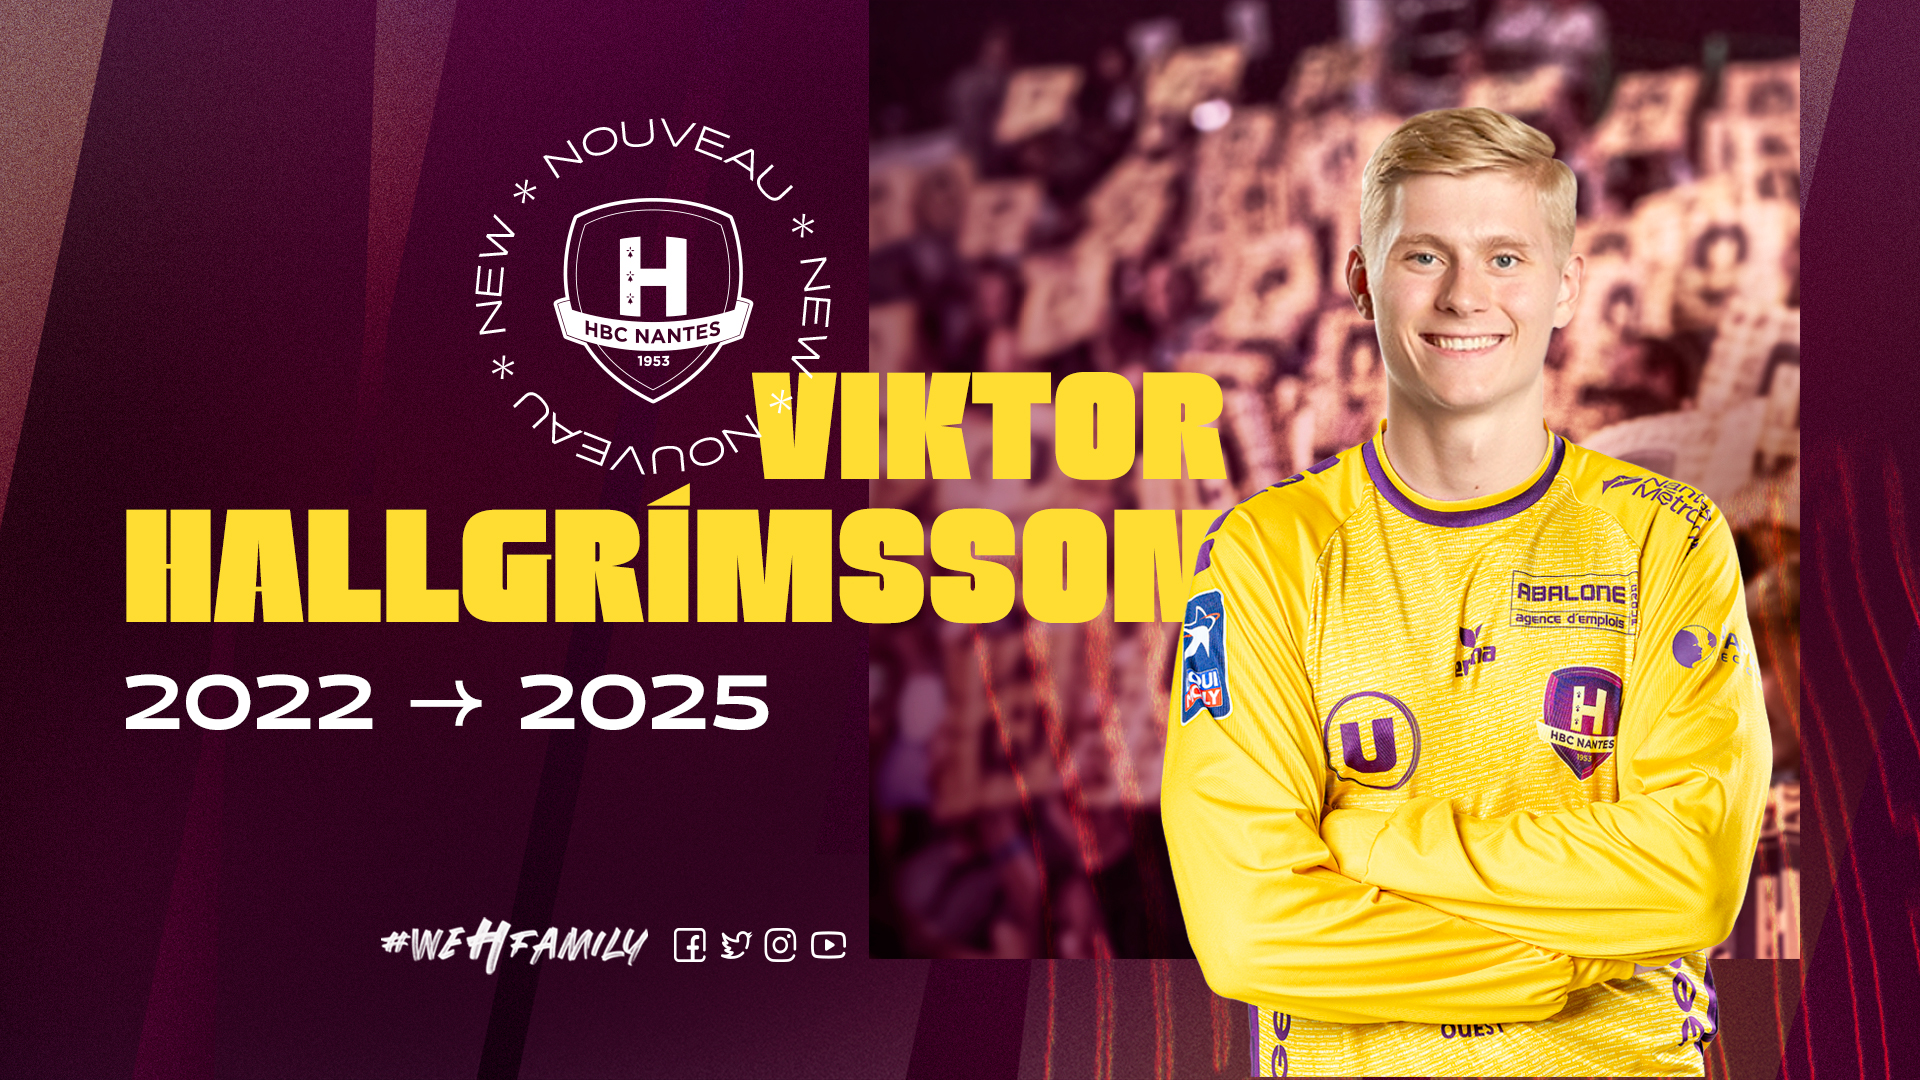 Viktor Hallgrimsson et Ivan Pesic au HBC Nantes en 2022